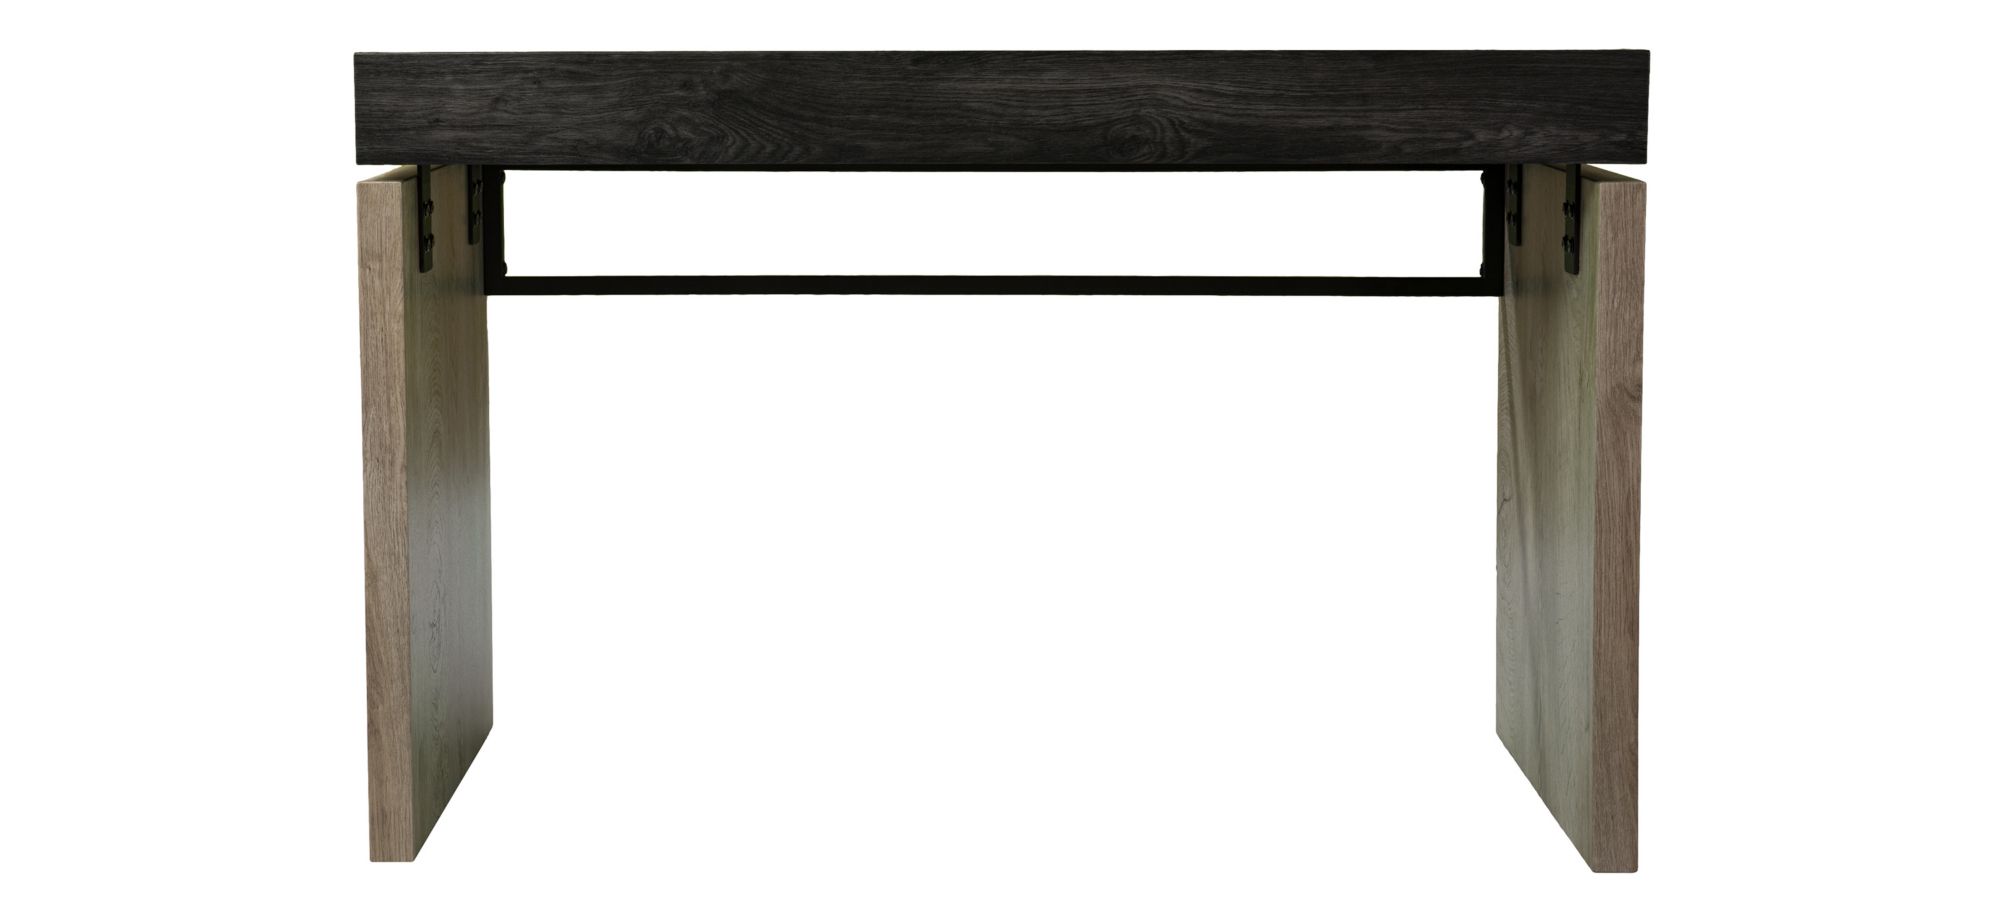 Eastleigh Desk in Black by SEI Furniture